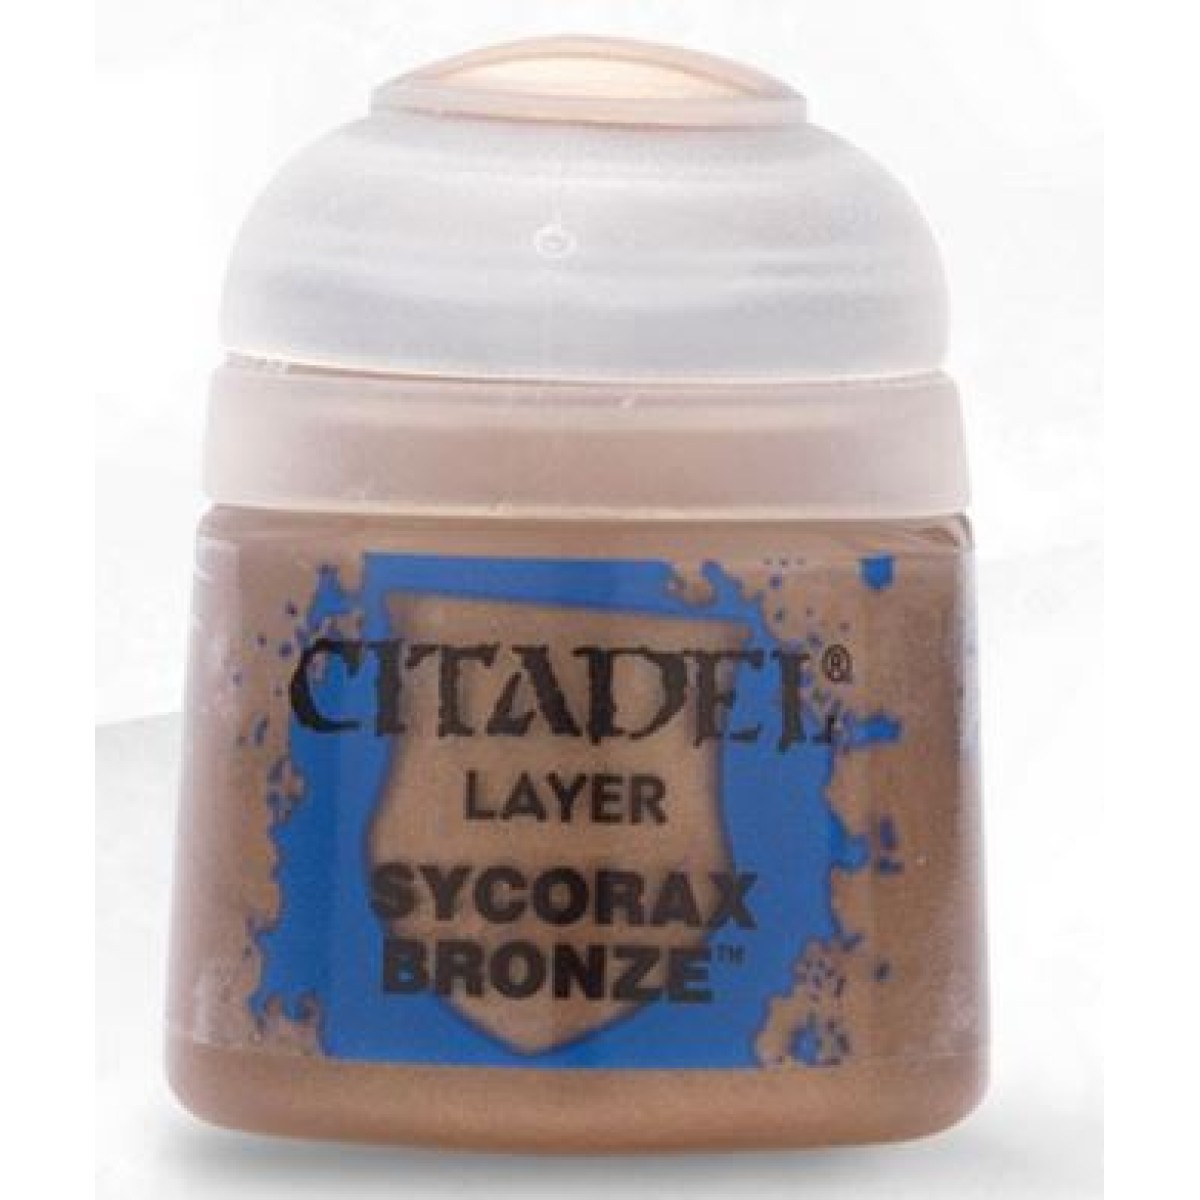 Citadel Layer Paint - Sycorax Bronze